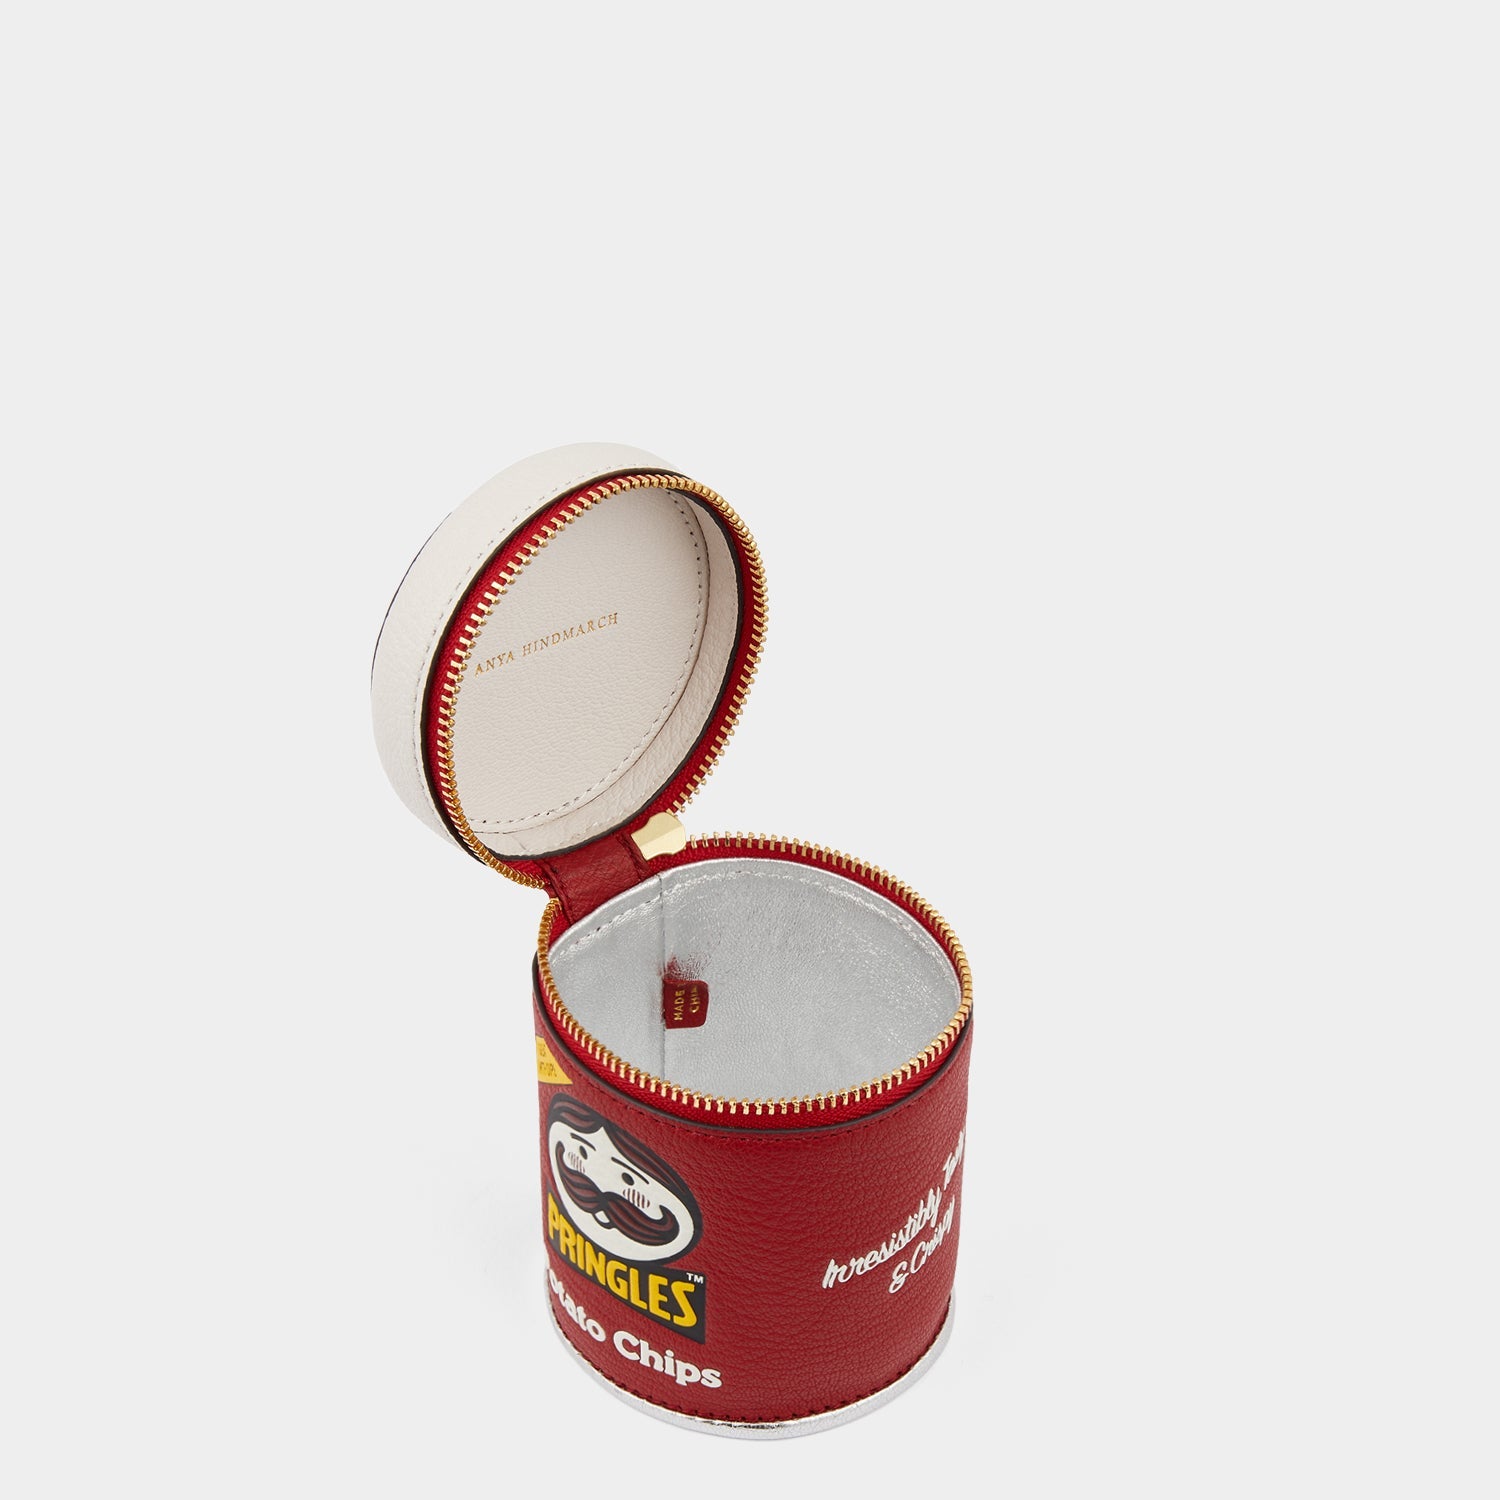 Anya Brands Pringles Coin Purse -

                  
                    Capra Leather in Red -
                  

                  Anya Hindmarch EU
